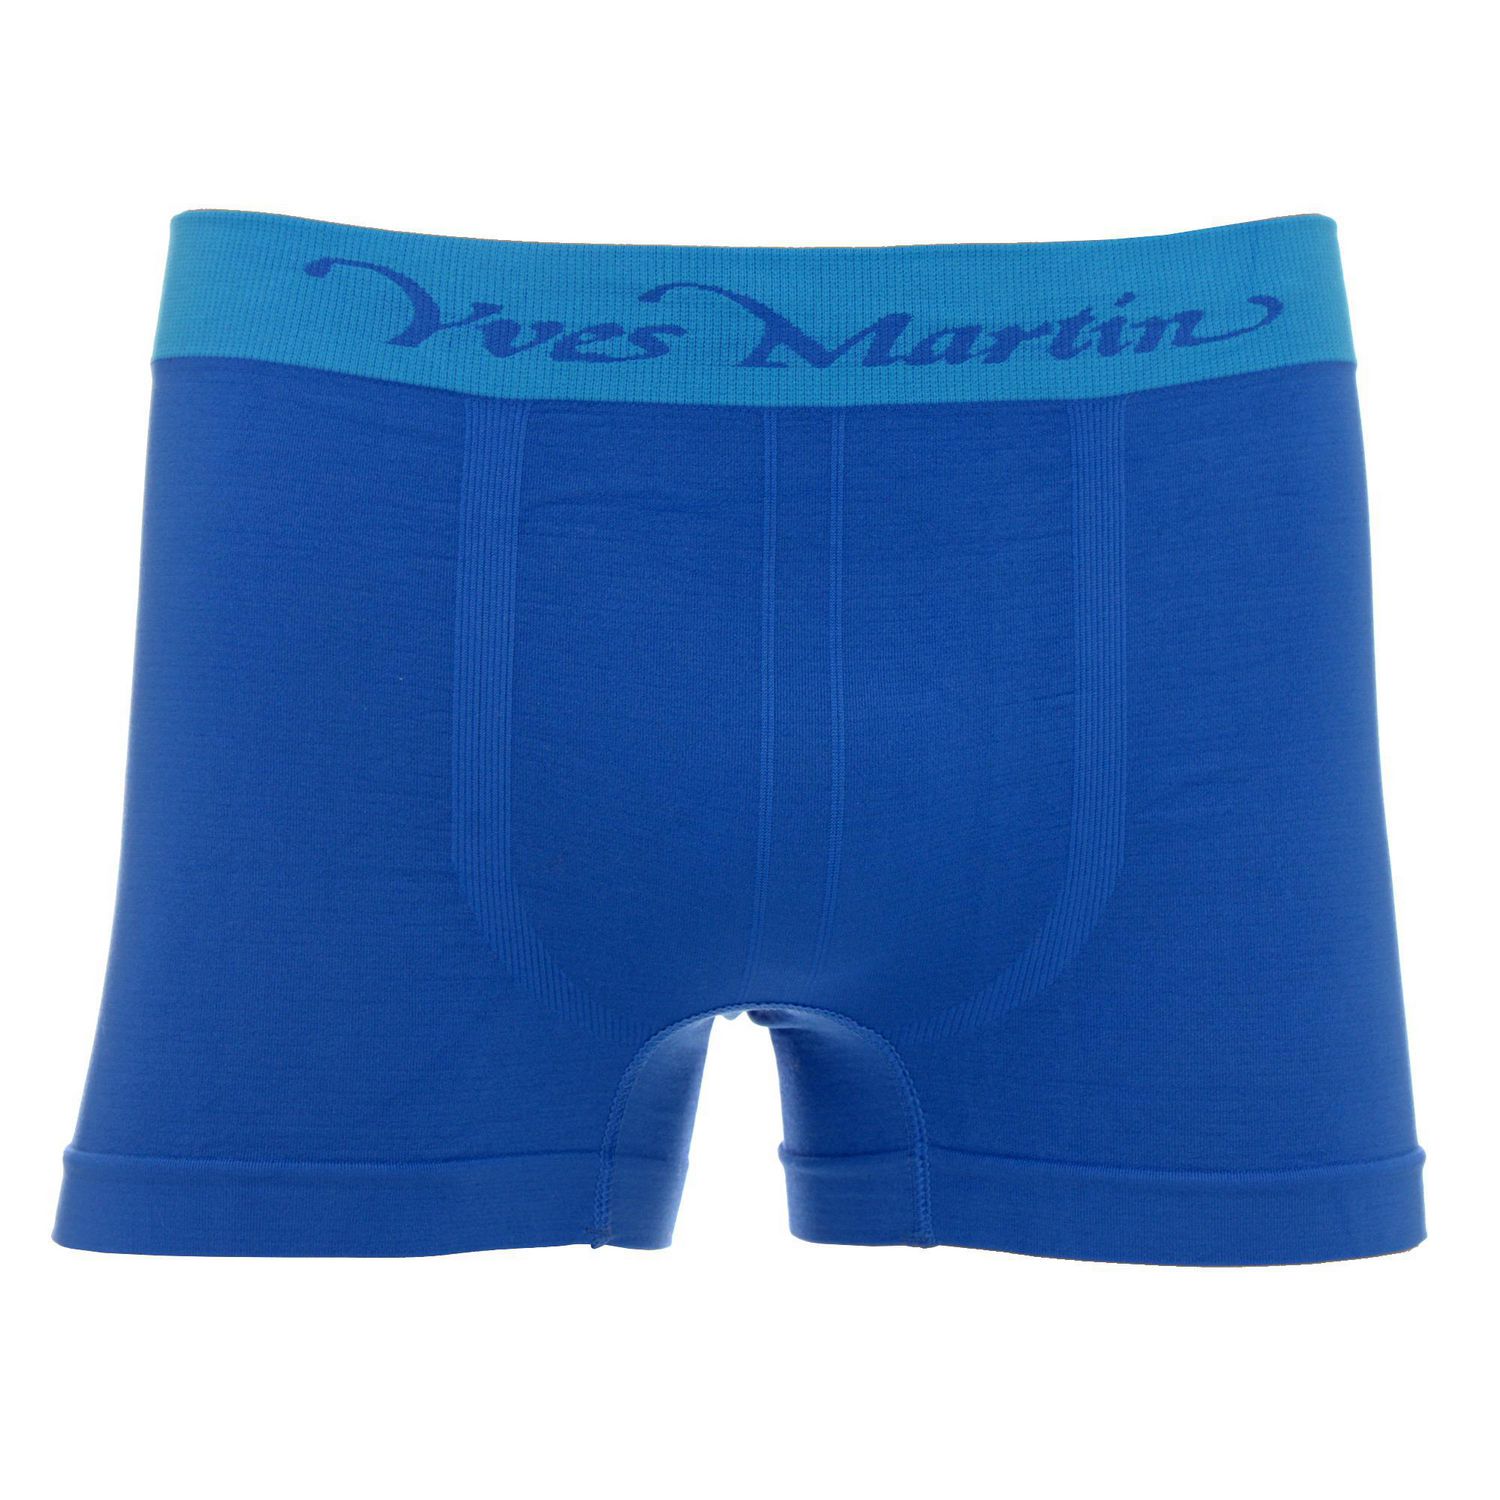 Yves Martin Underwear - Men's Side Stripe Seamless Boxers